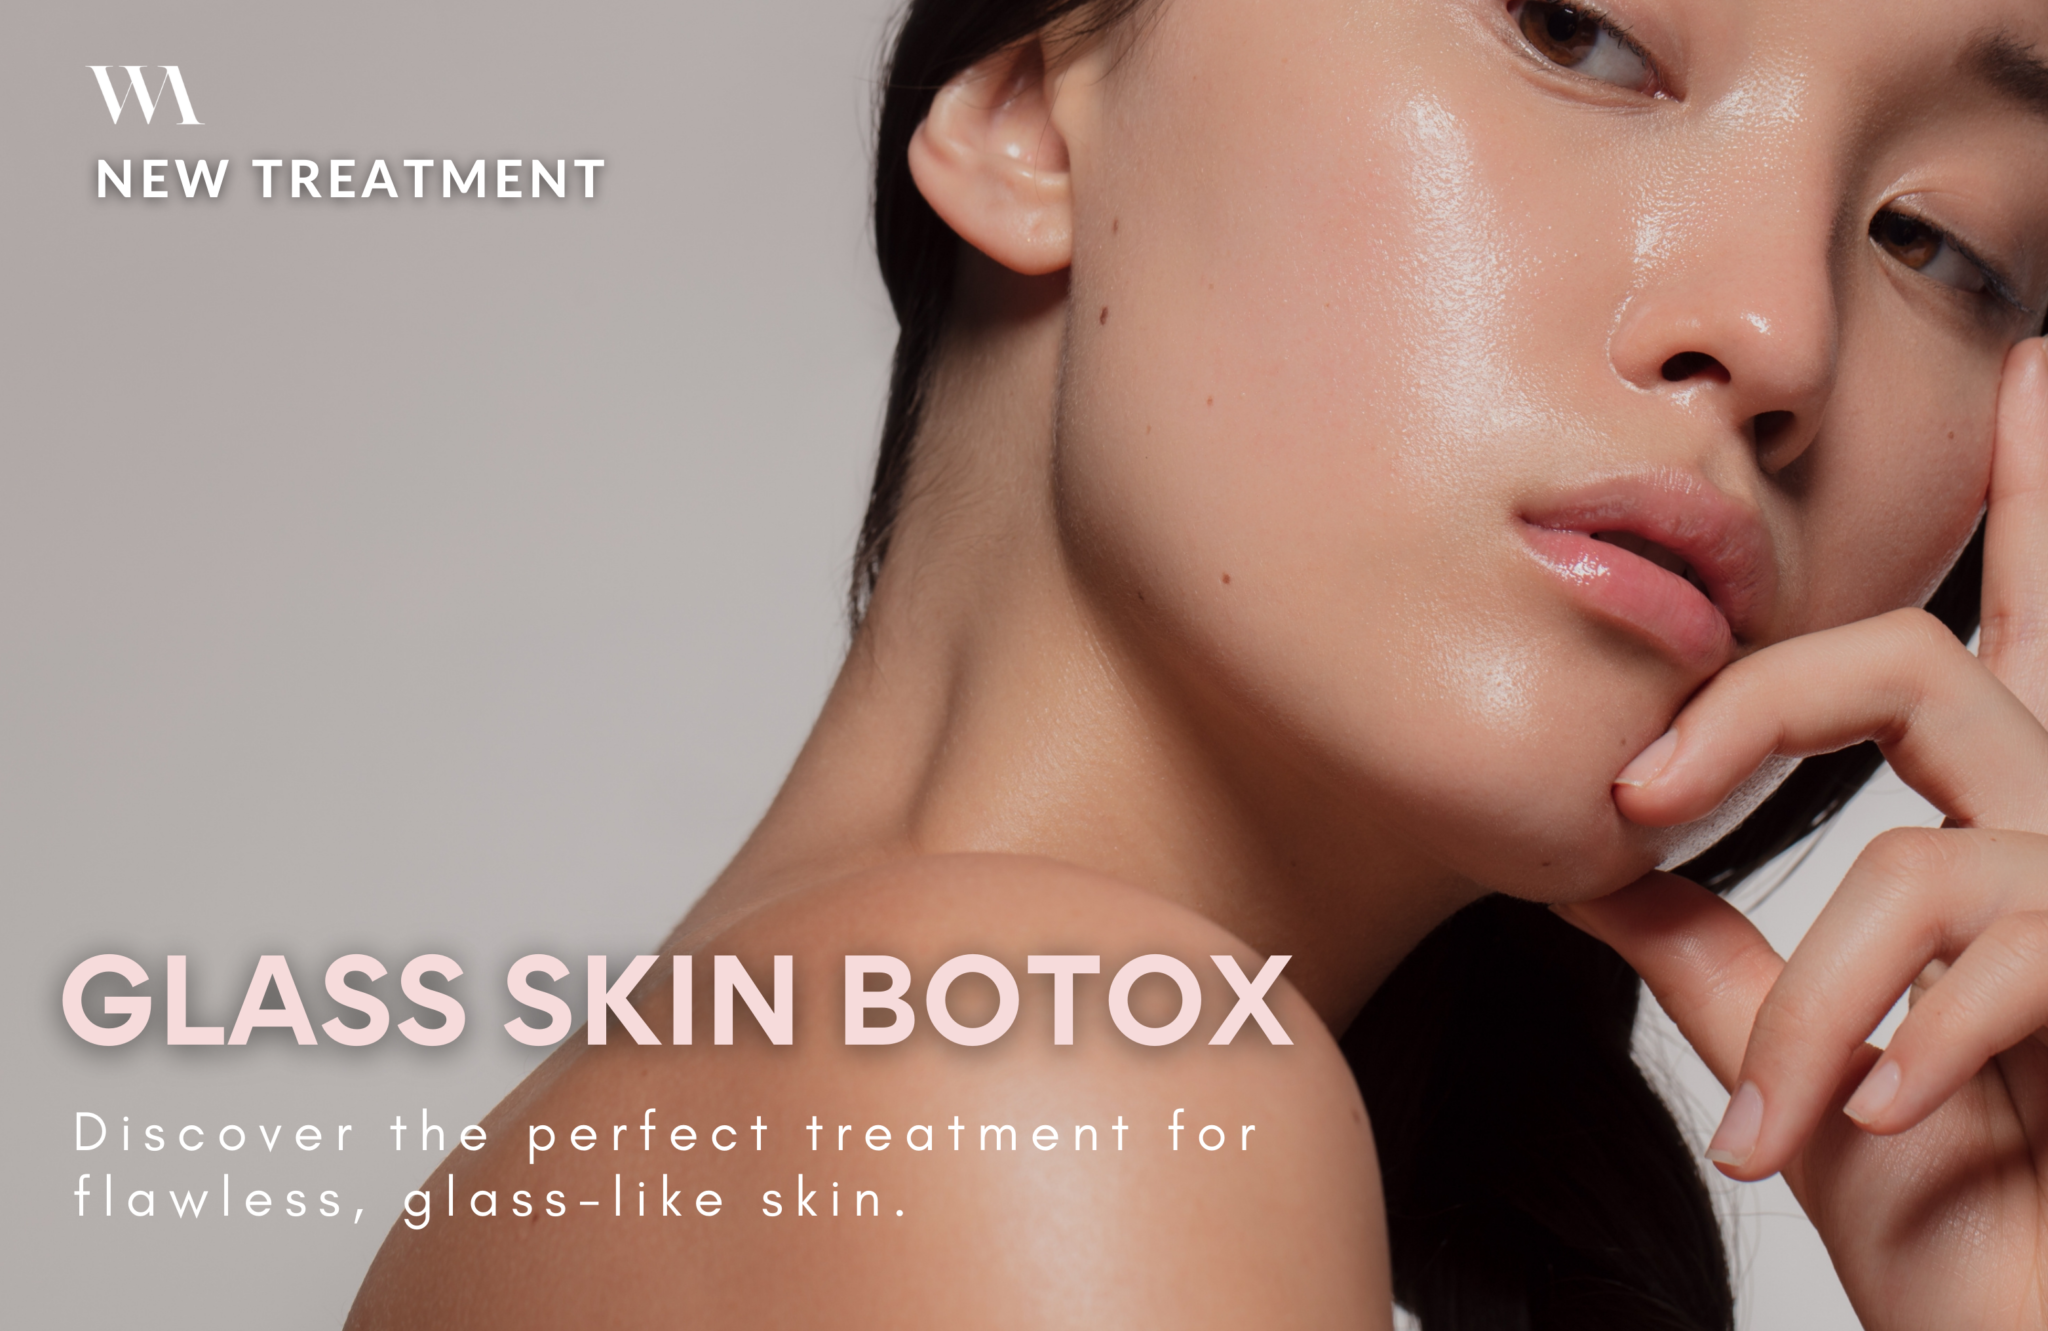 New Treatment Glass Skin Botox banner image whyte aesthetics